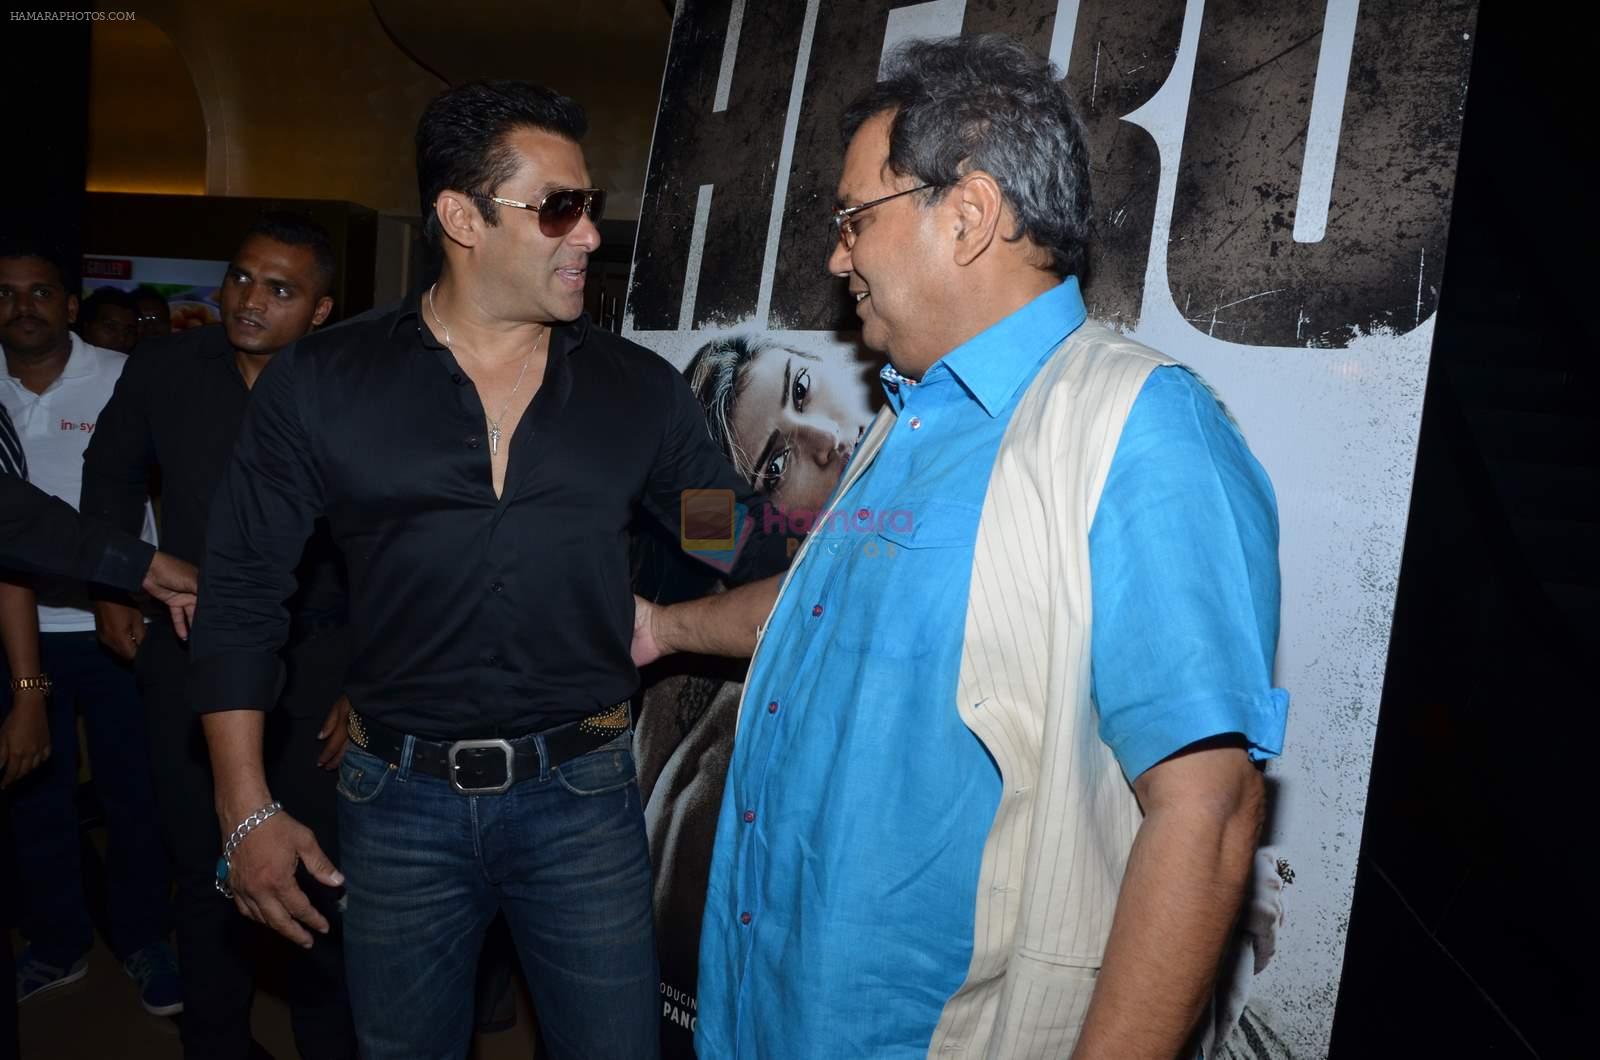 Salman Khan, Subhash Ghai at Hero Tralier Launch on 16th July 2015